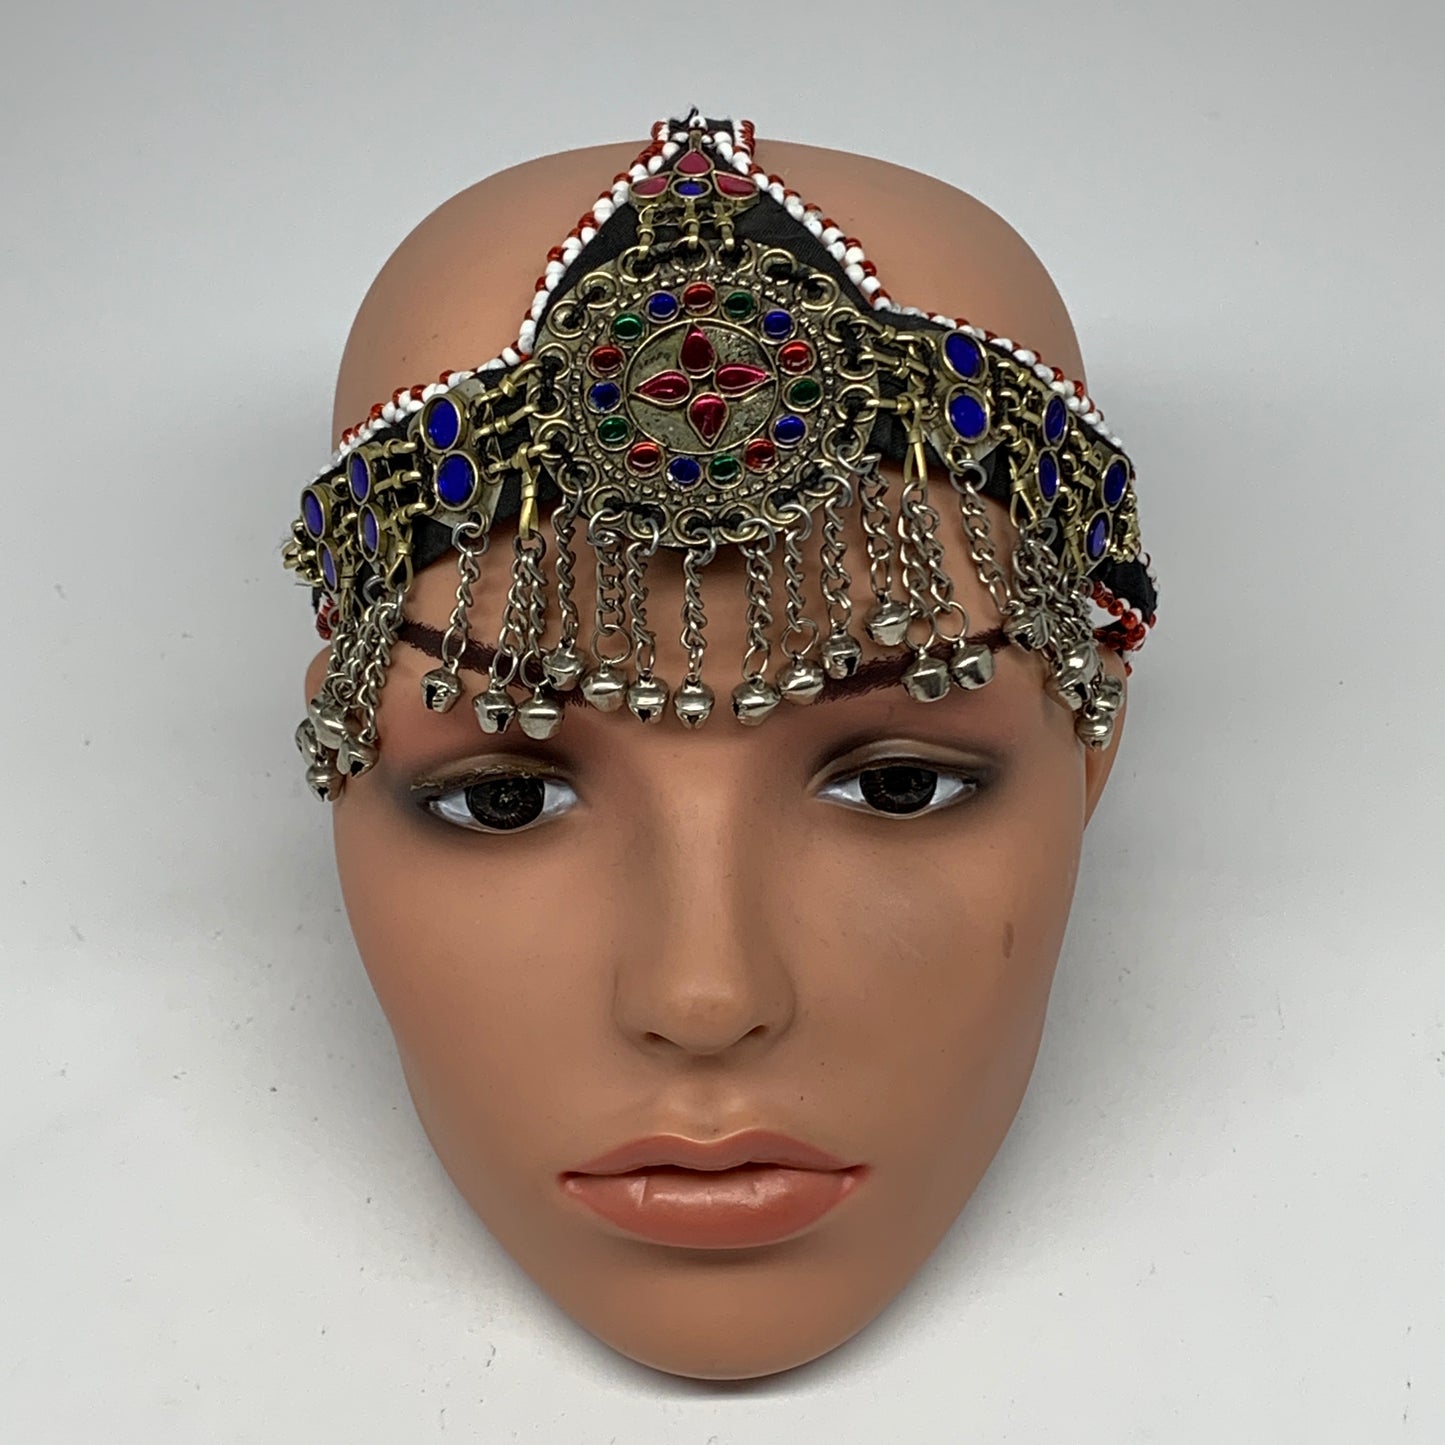 77.8g, Kuchi Headdress Headpiece Afghan Ethnic Tribal Jingle Bells @Afghanistan,